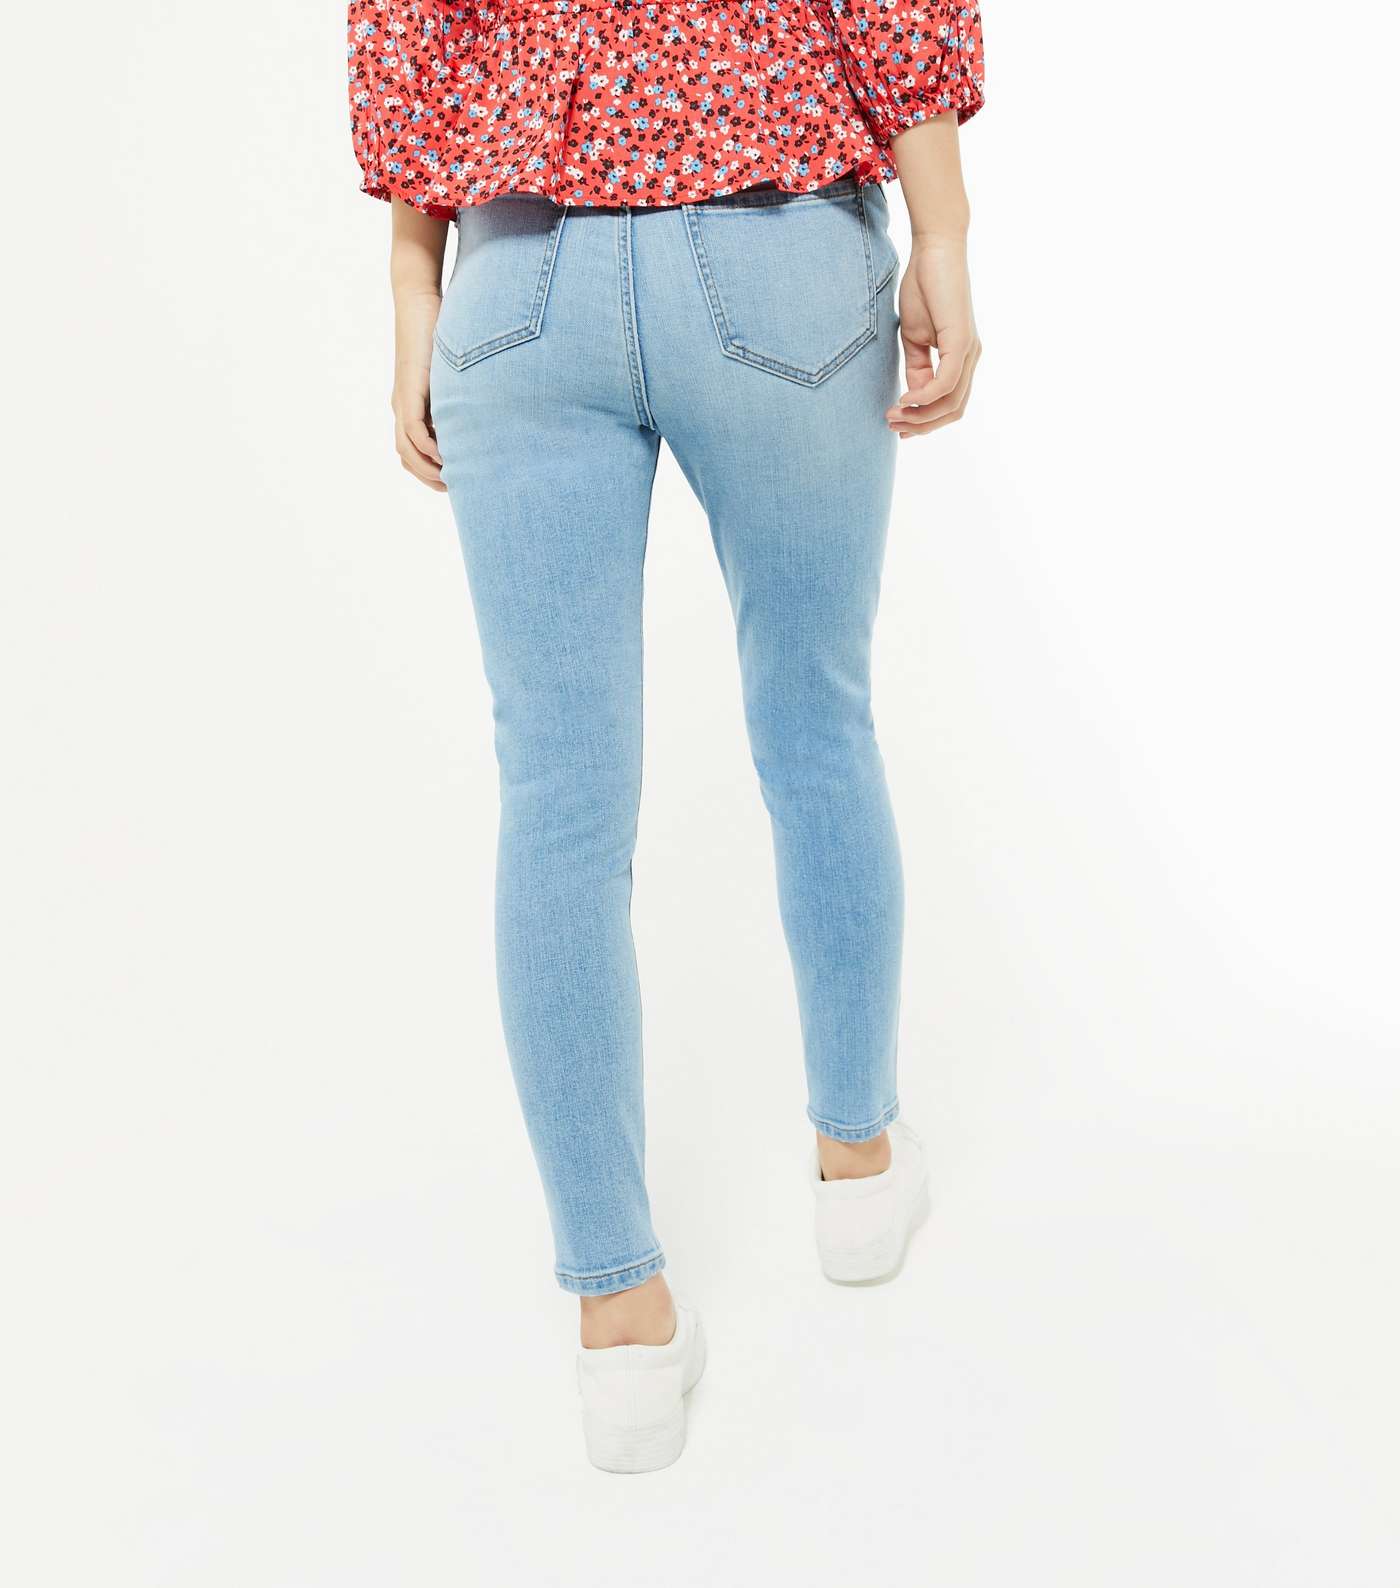 Petite Pale Blue Lift & Shape Jenna Skinny Jeans Image 3